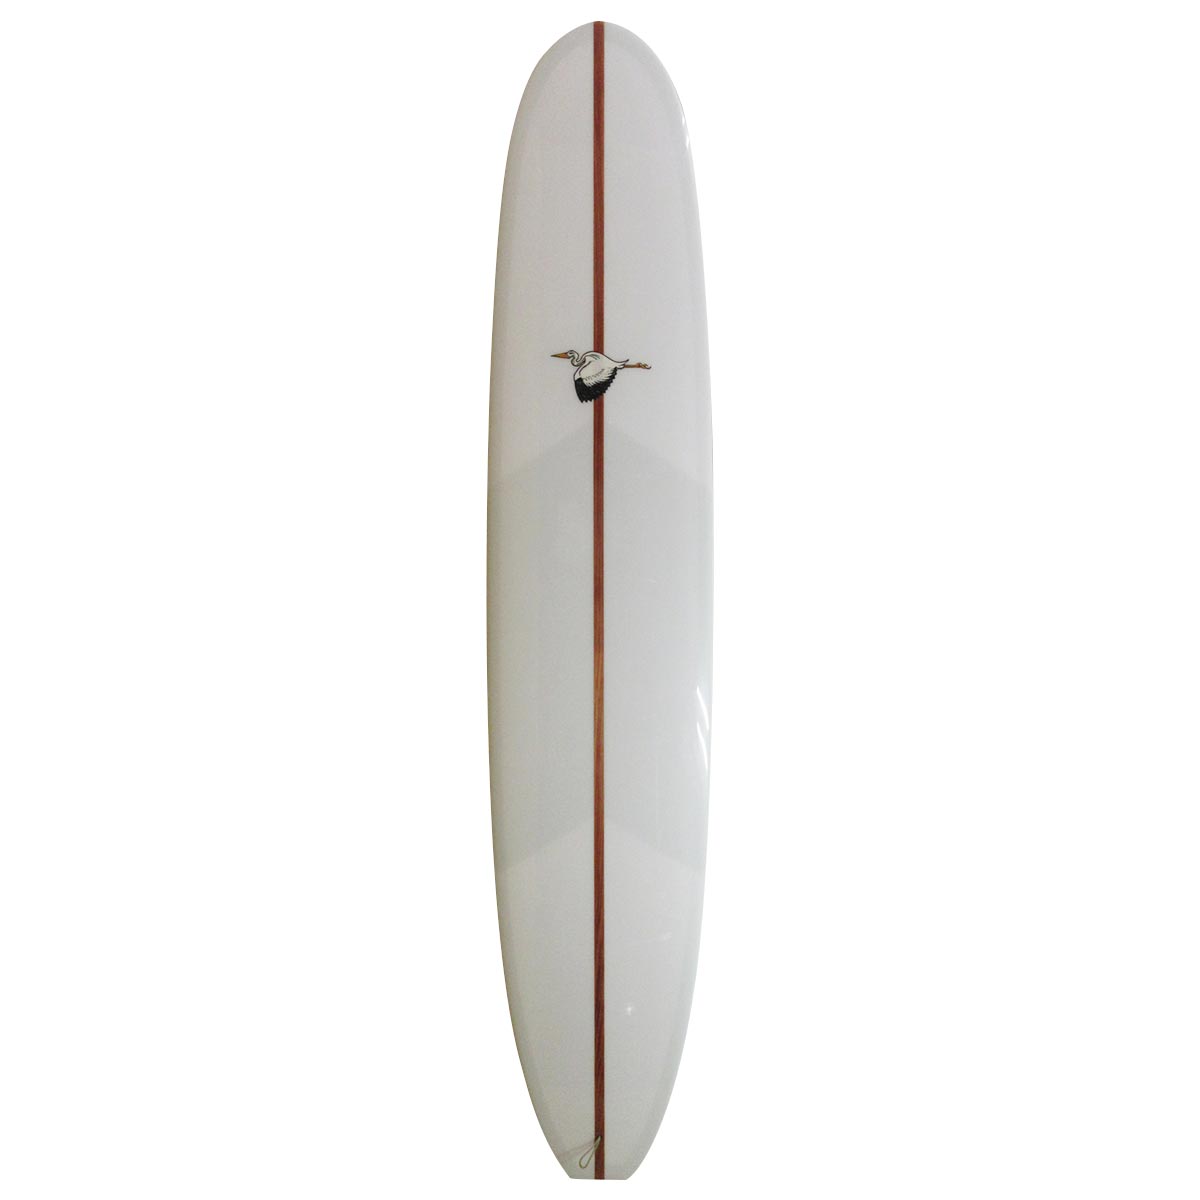  / WESTON SURFBOARDS / AXIS 9`6